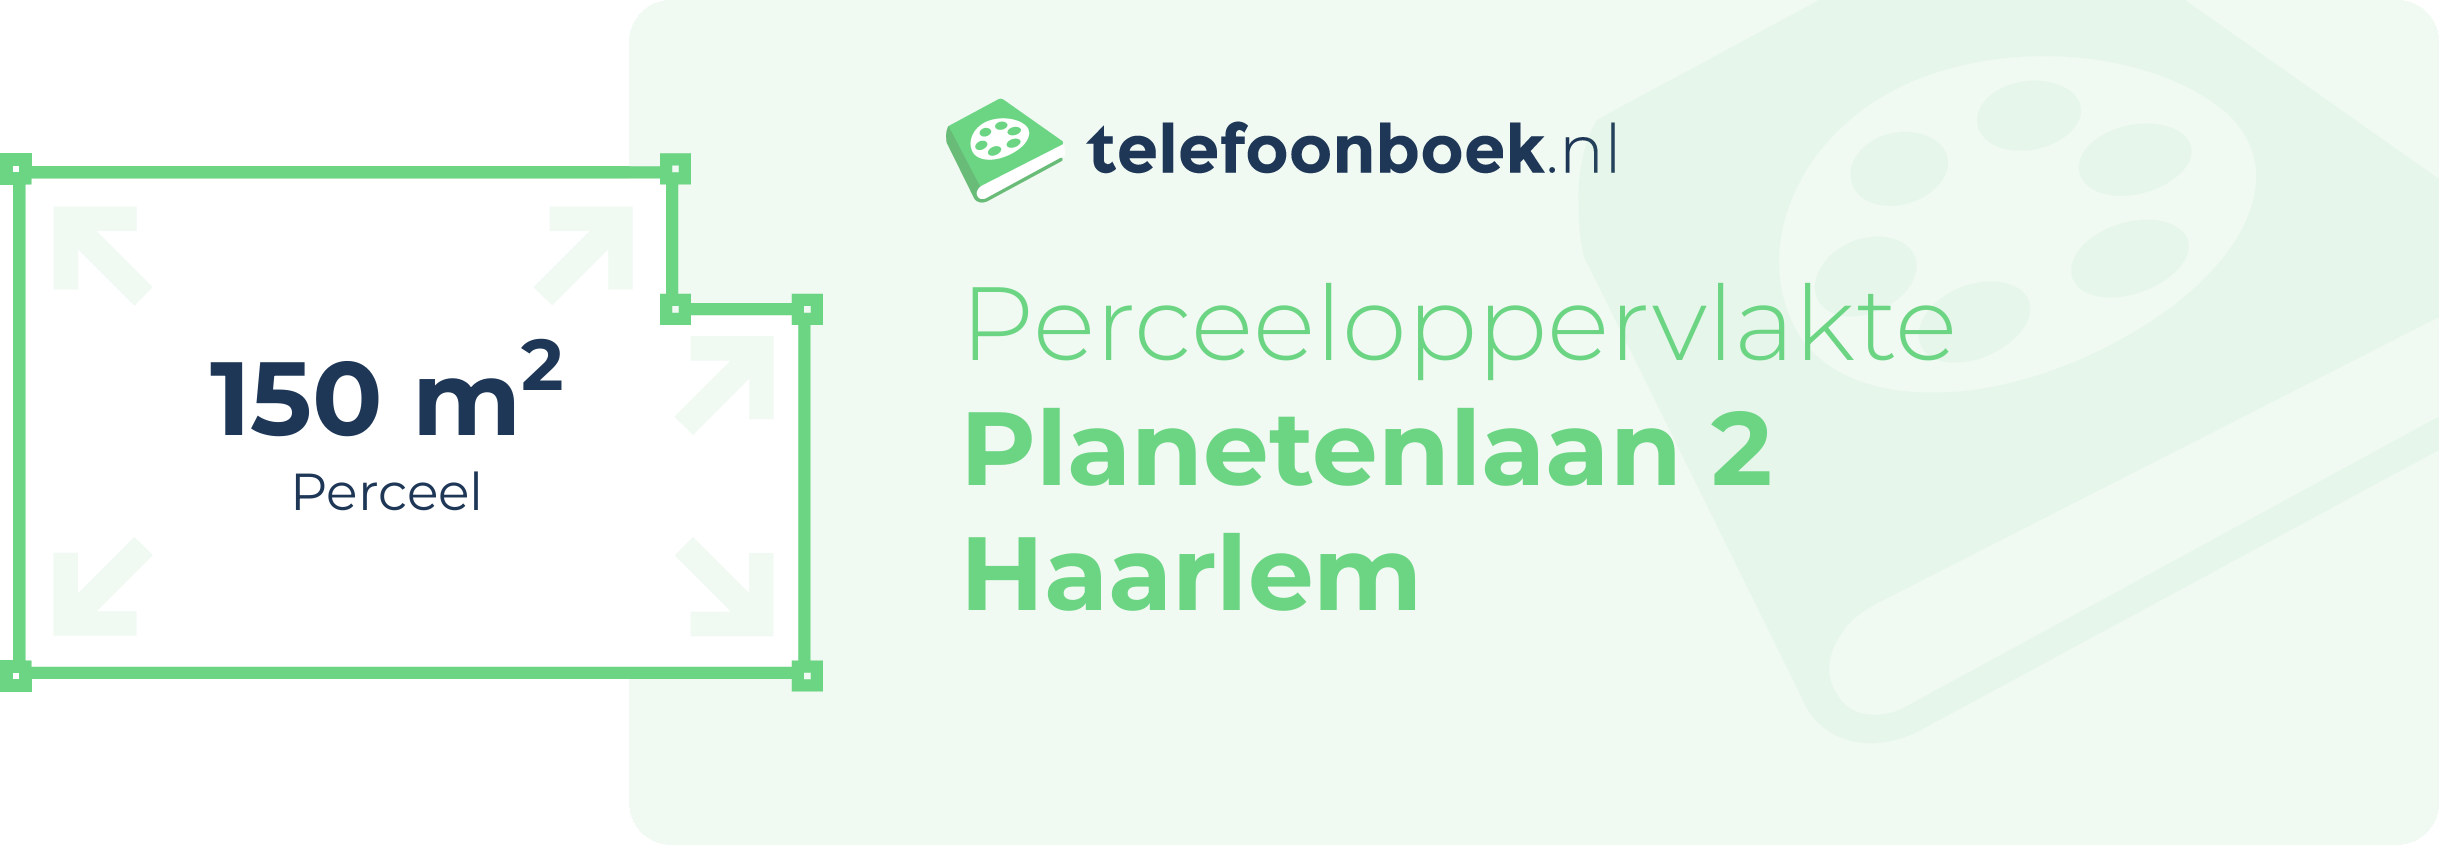 Perceeloppervlakte Planetenlaan 2 Haarlem